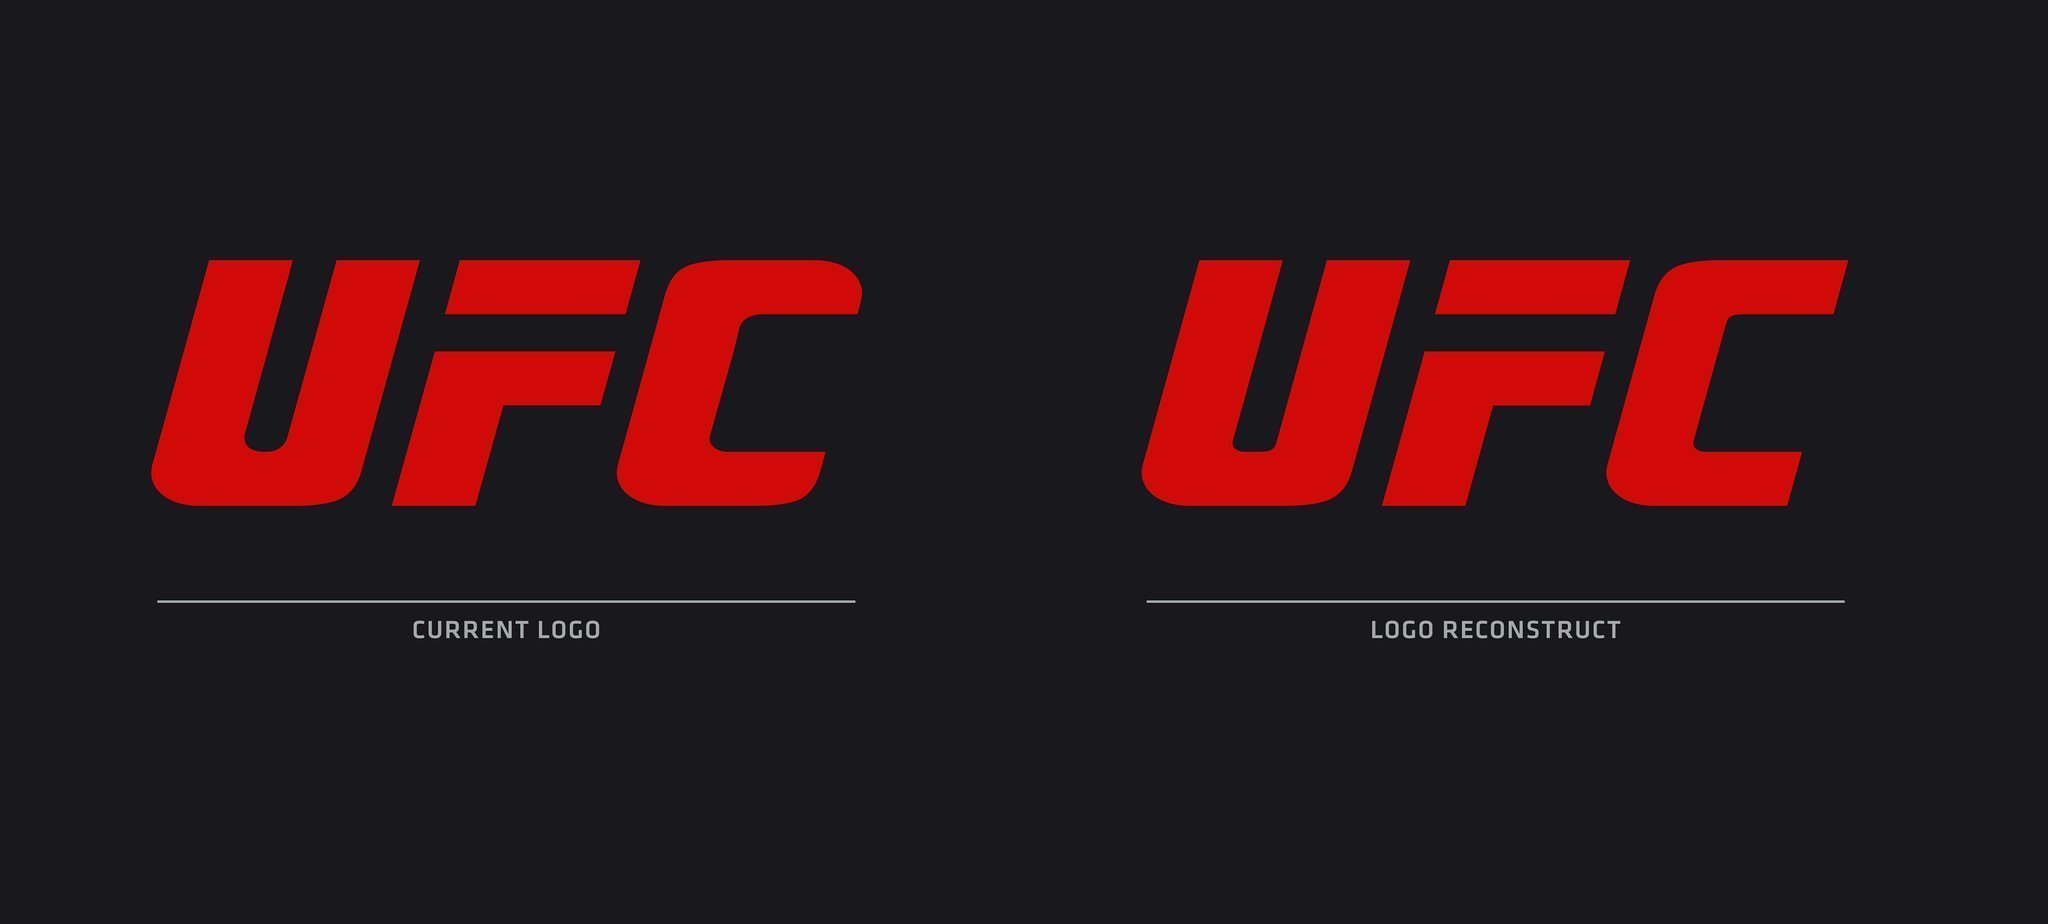 sdut-ufcs-tiny-logo-change-is-a-big-deal-for-its-new-2015jul08